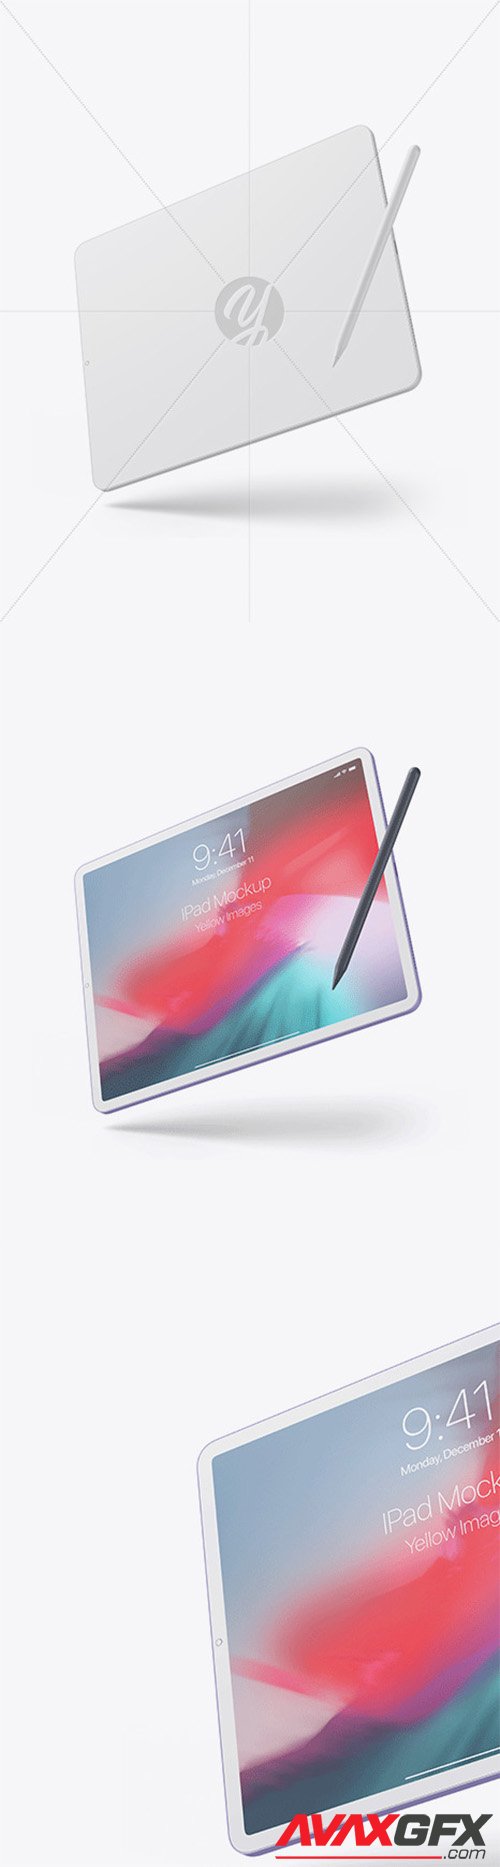 Clay Apple iPad Pro 2018 12.9 Mockup 56998